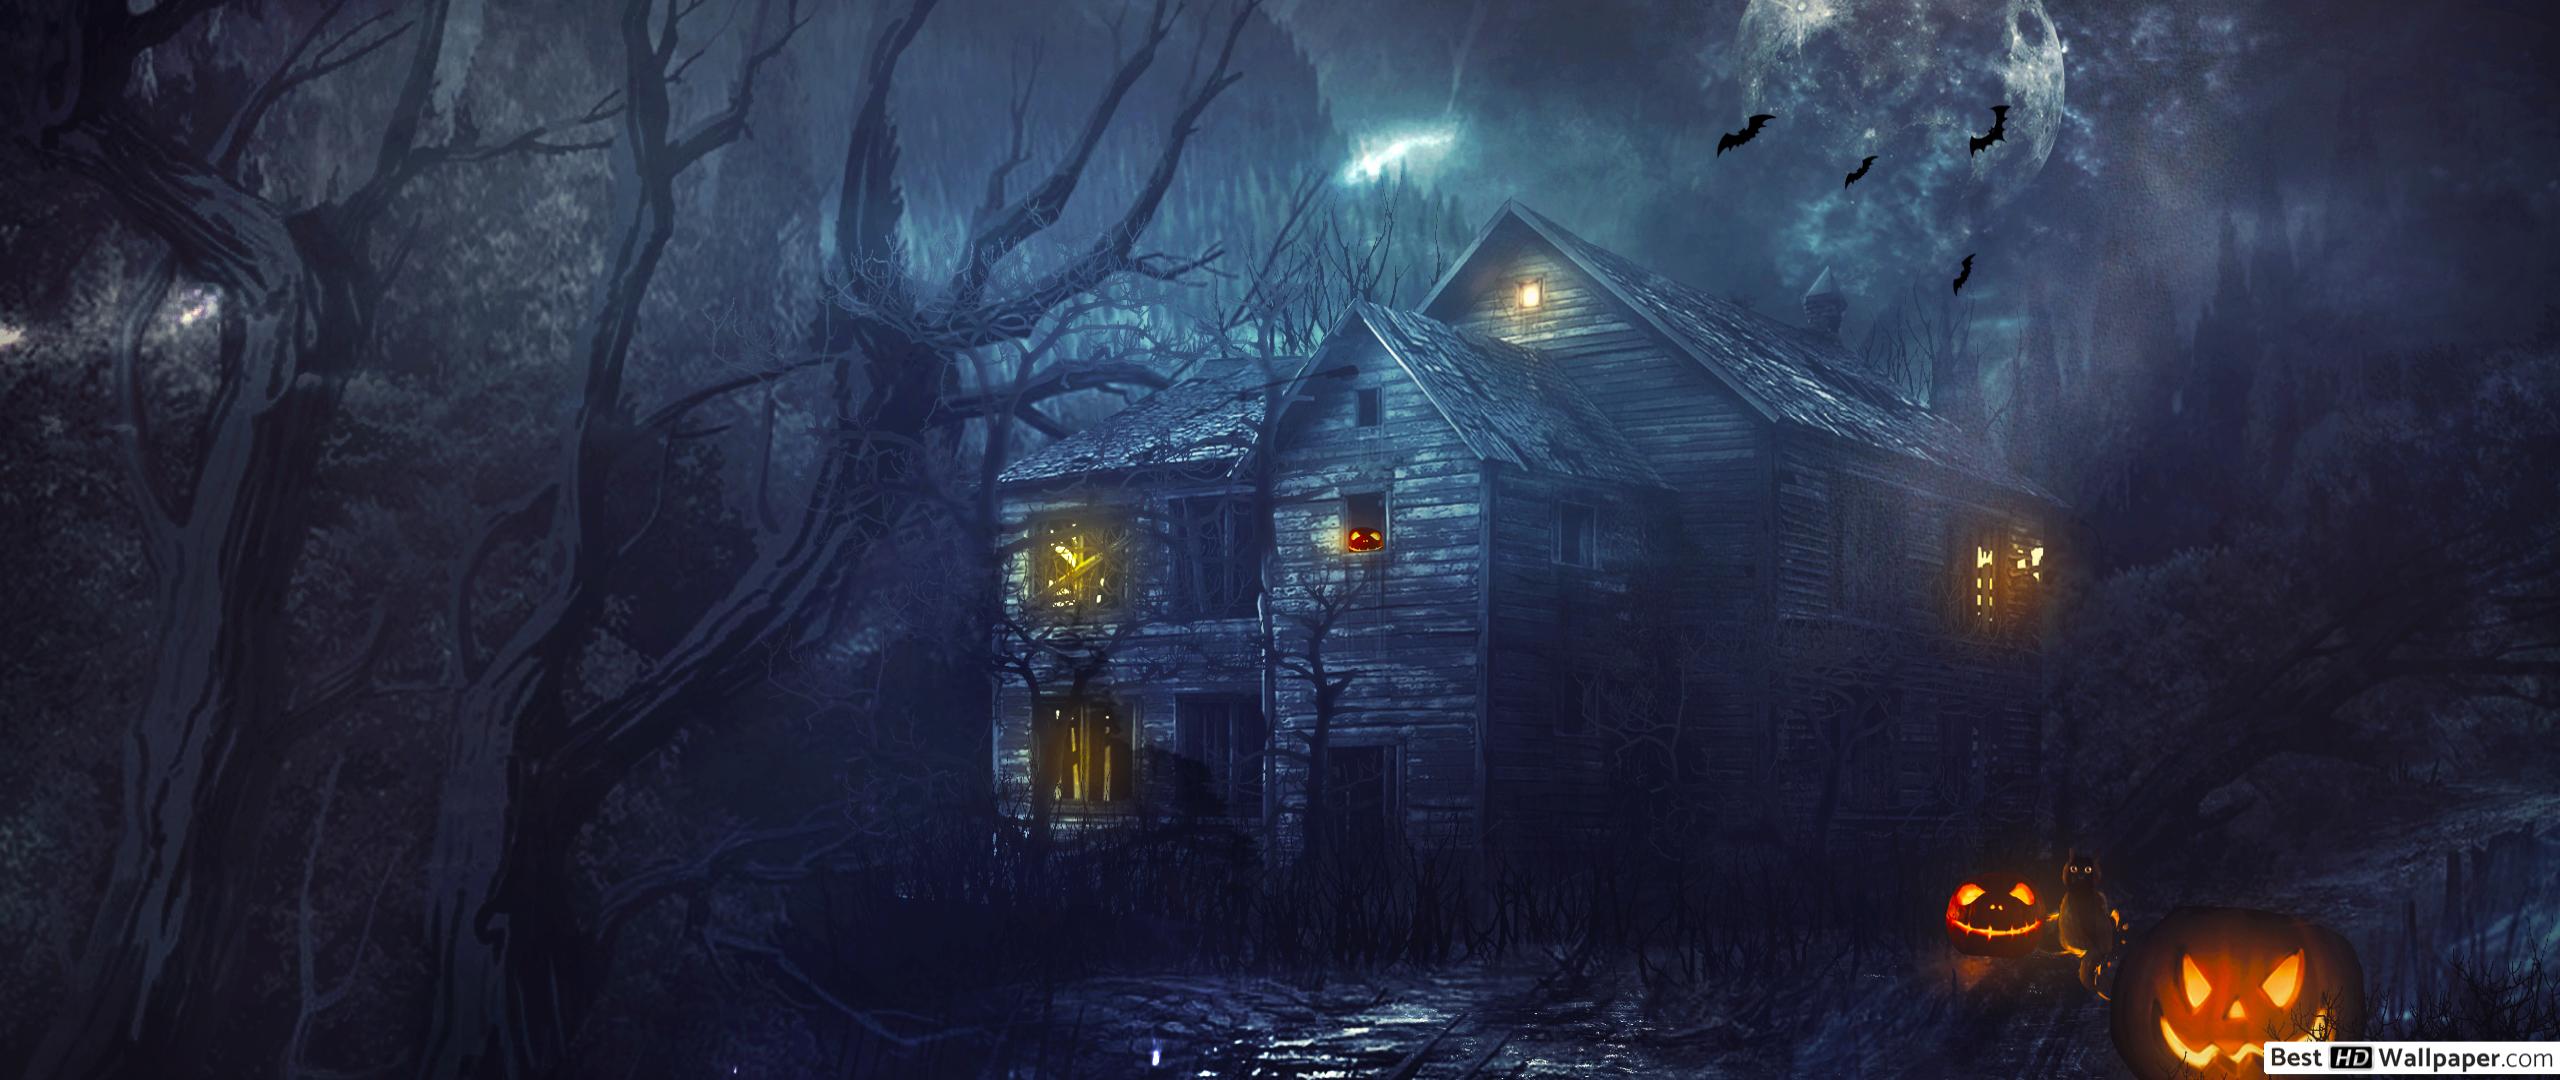 Halloween Haunted House HD wallpaper download